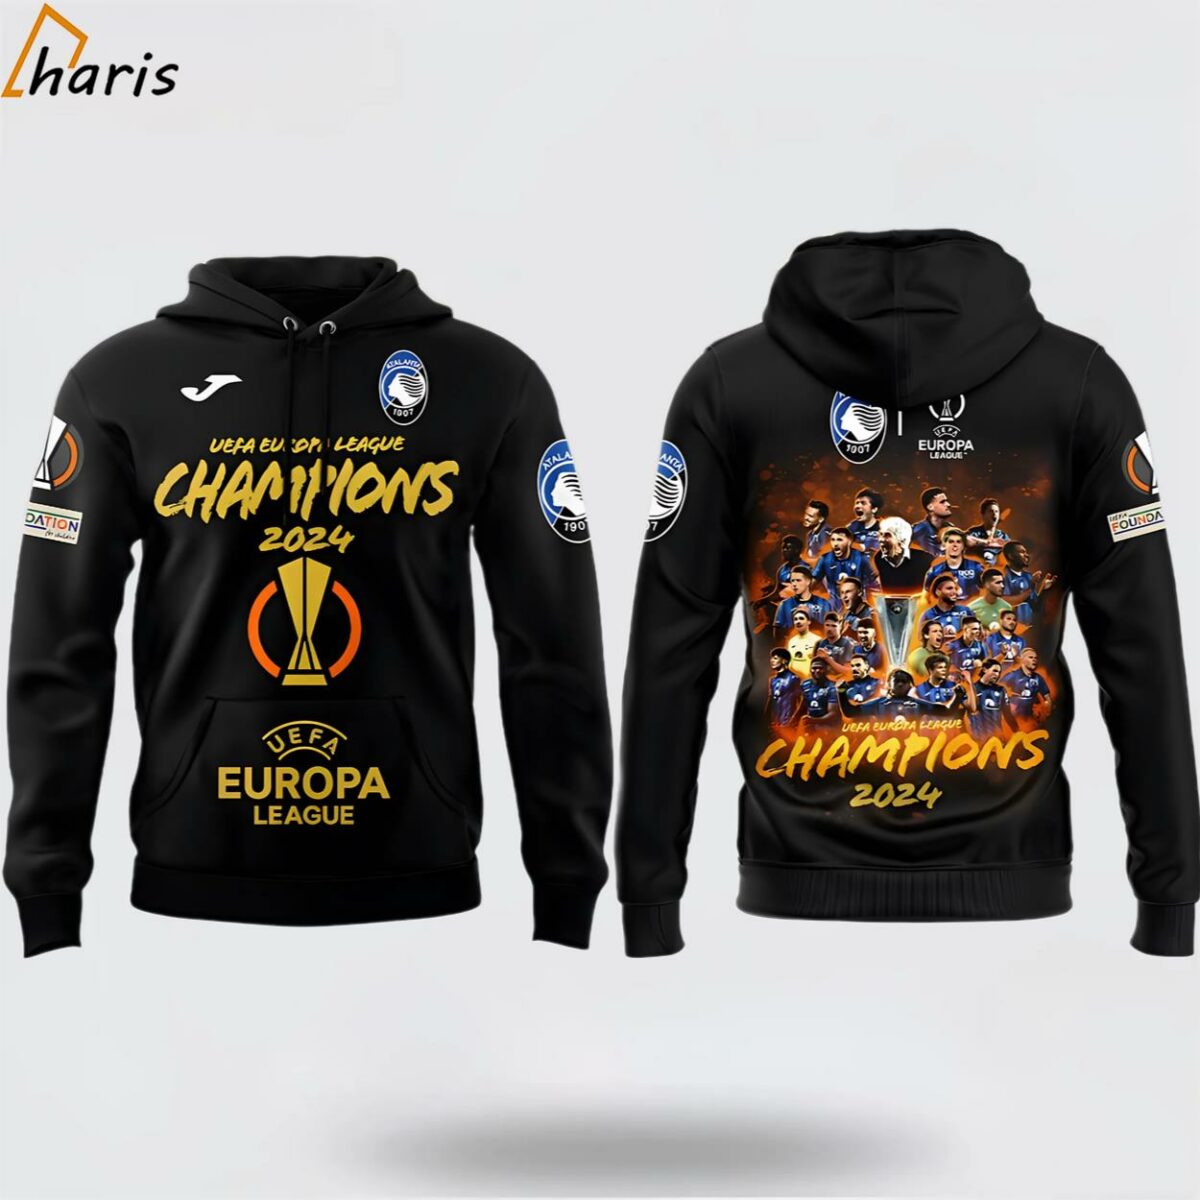 Atalanta UEFA Europa League Champions 2024 3D Hoodie 1 jersey